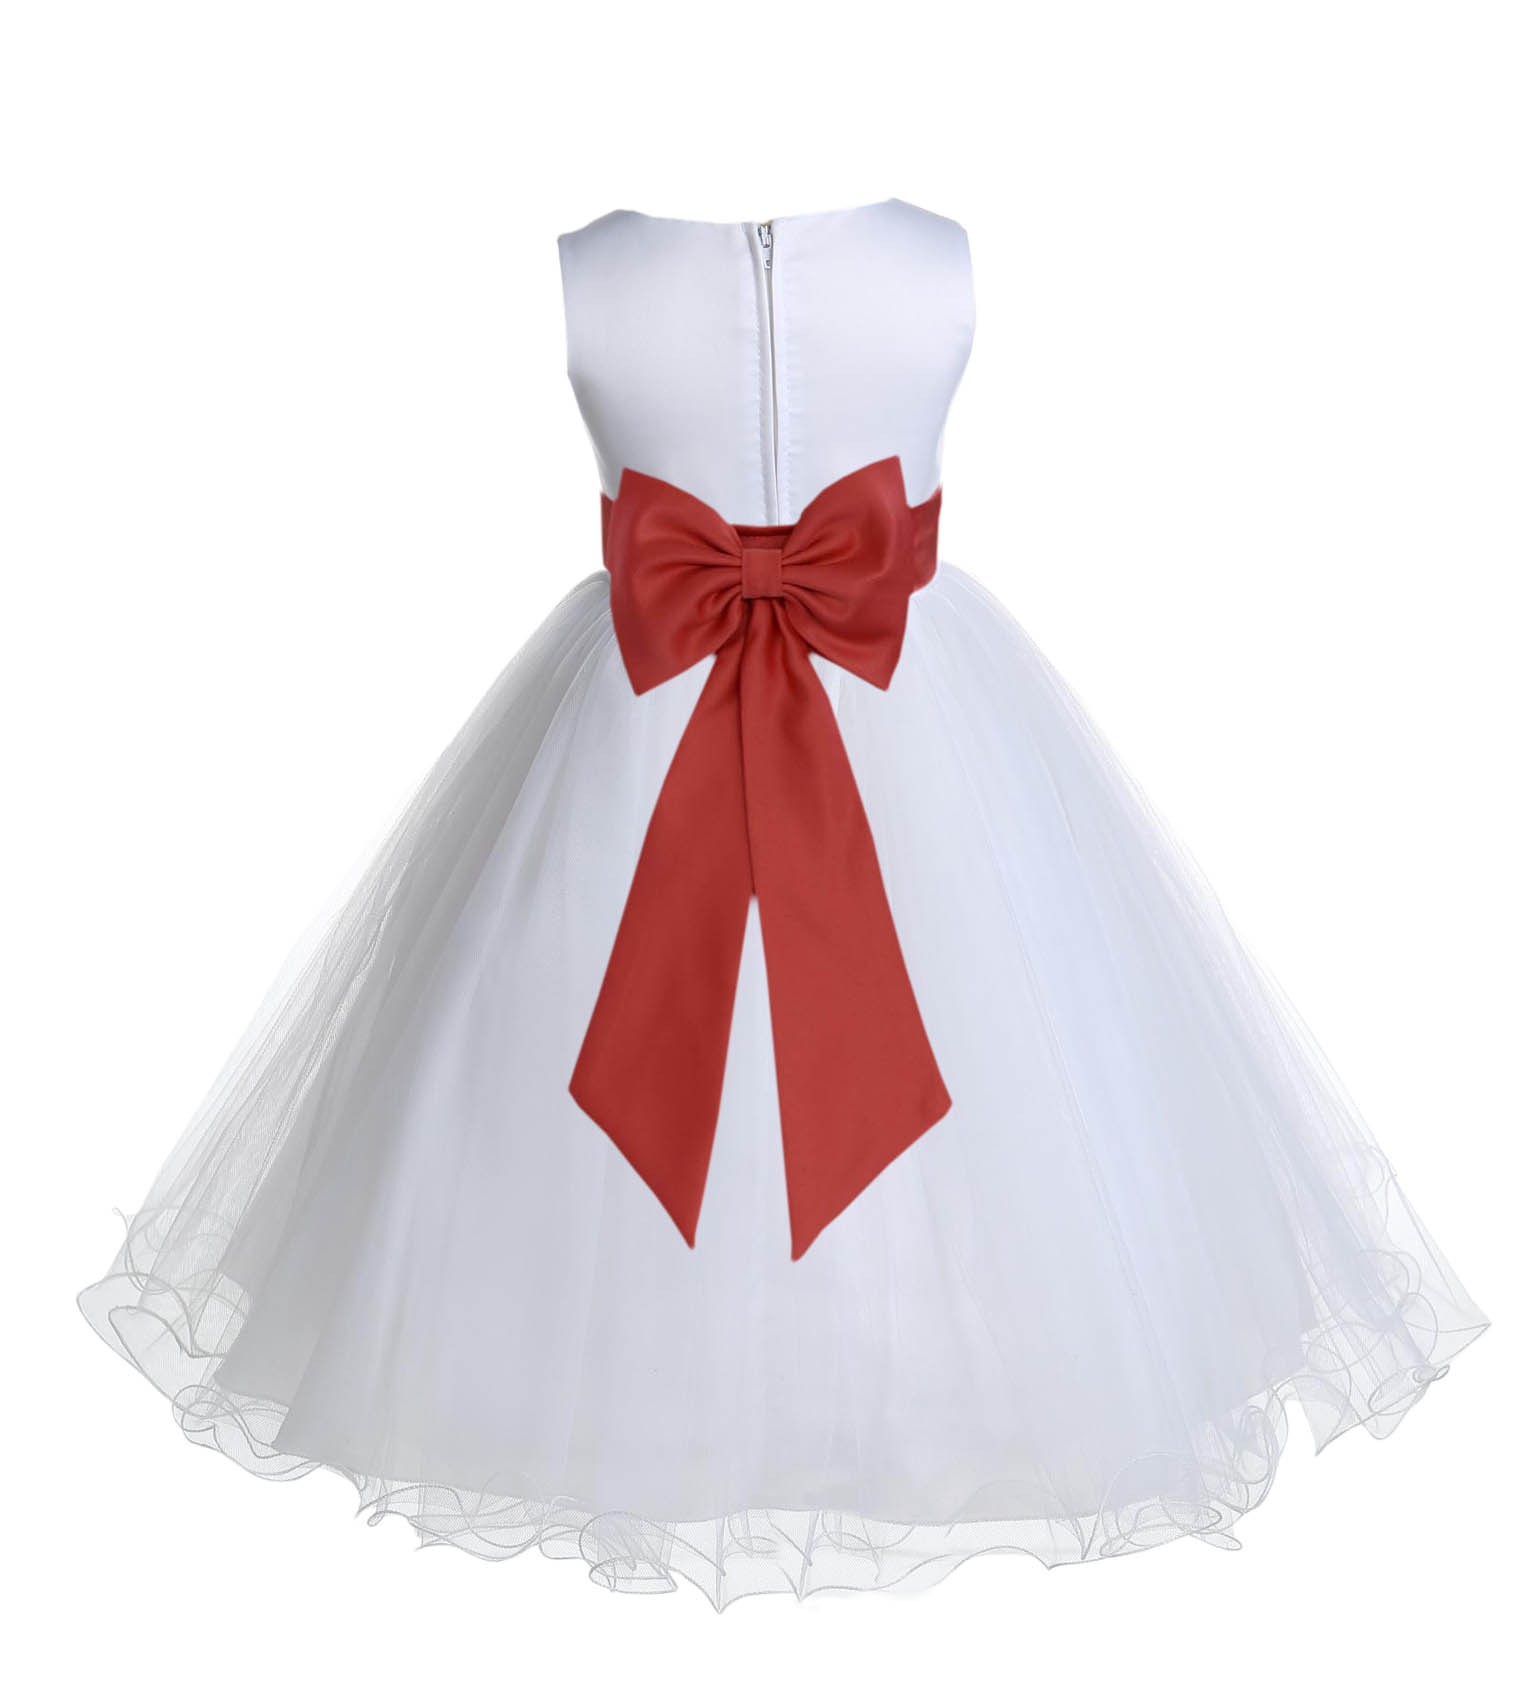 White/Guava Tulle Rattail Edge Flower Girl Dress Wedding Bridesmaid 829T